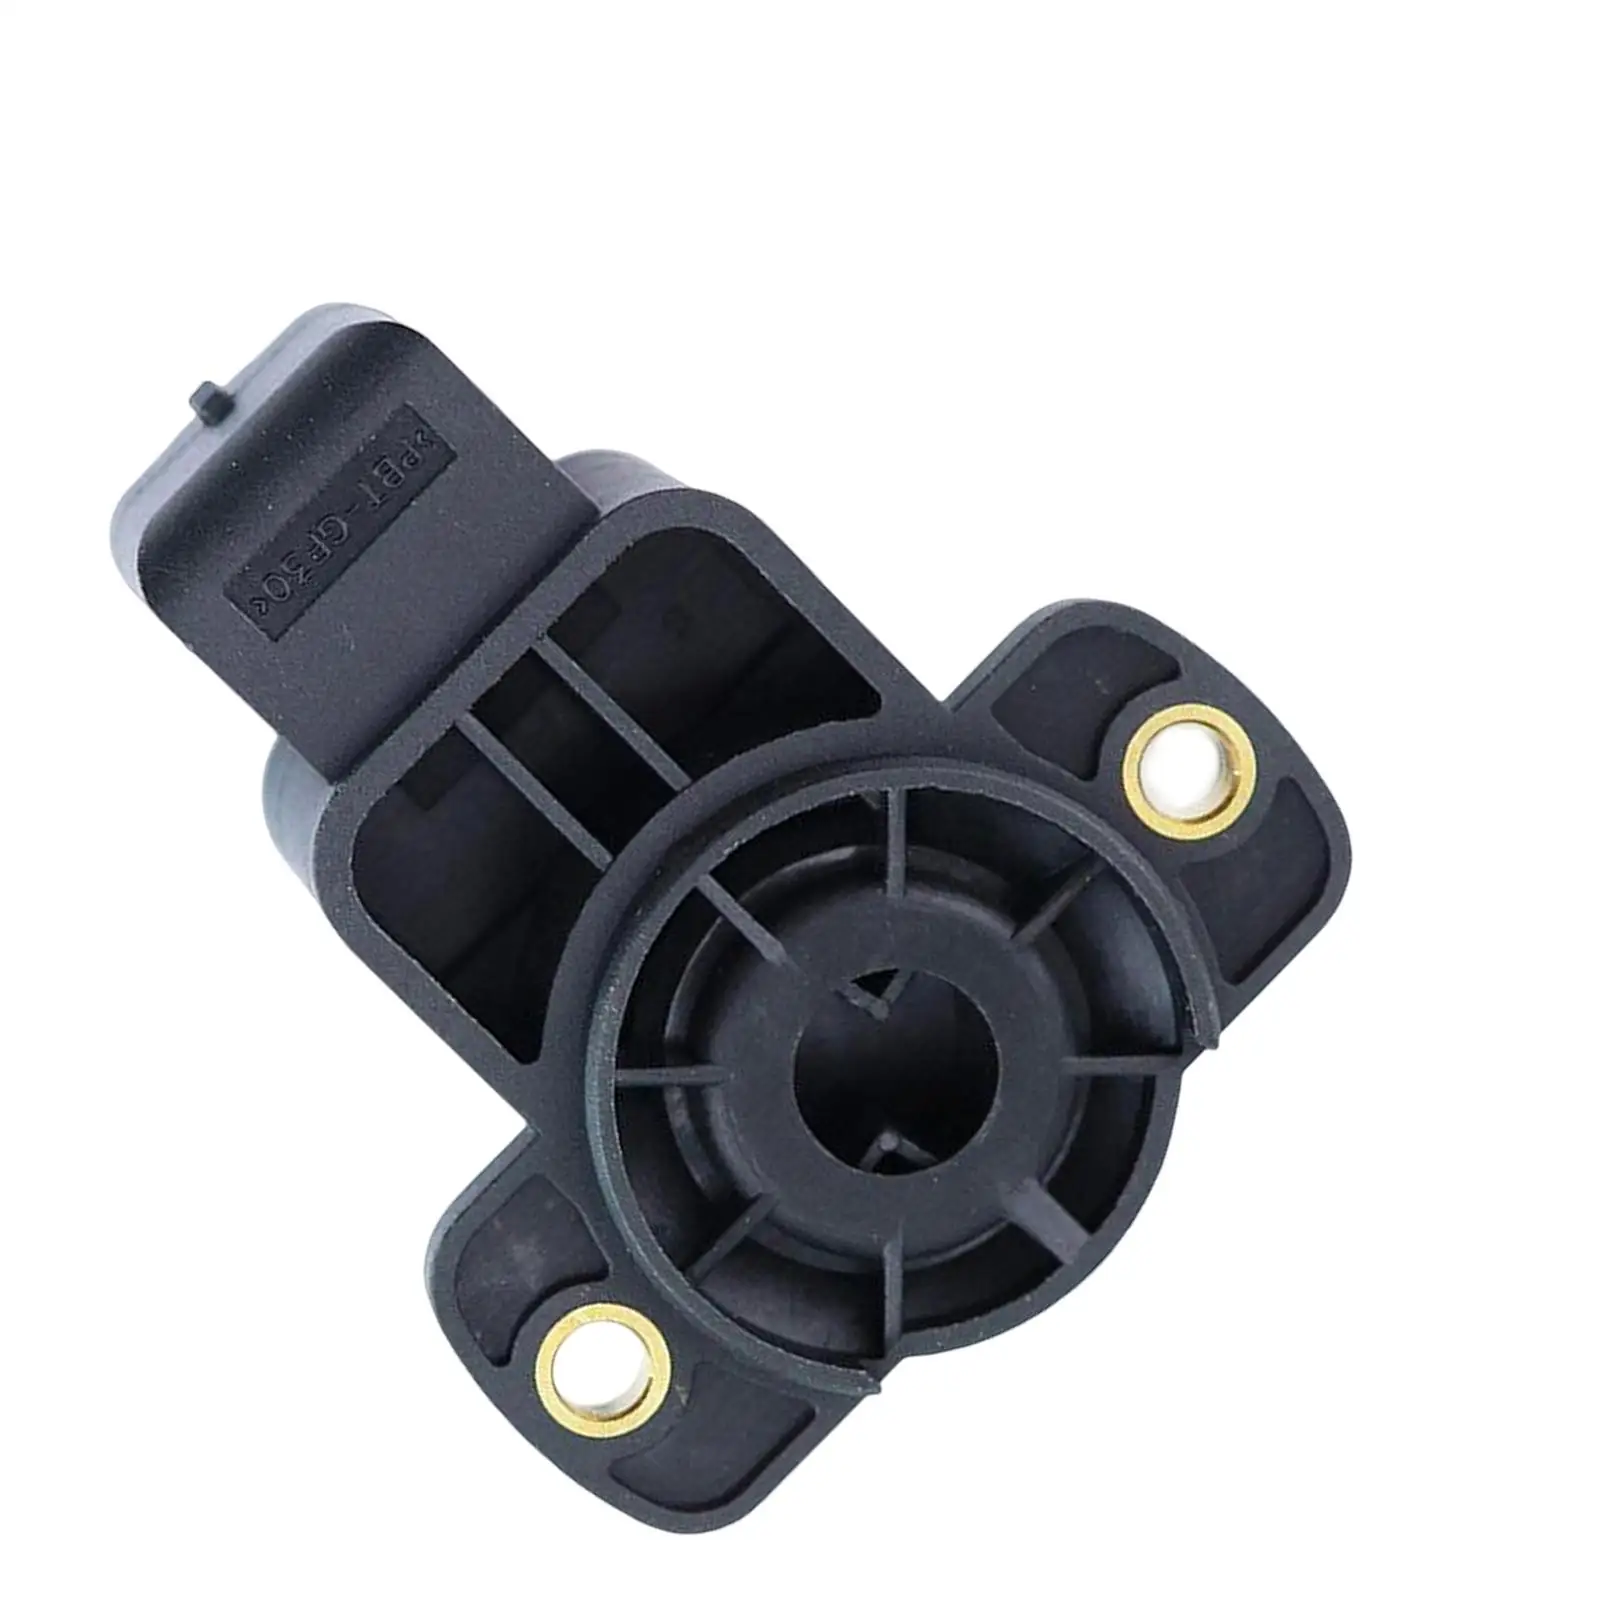 Throttle Position Sensor 9642473280 Fits for Berlingo Accessories Replaces